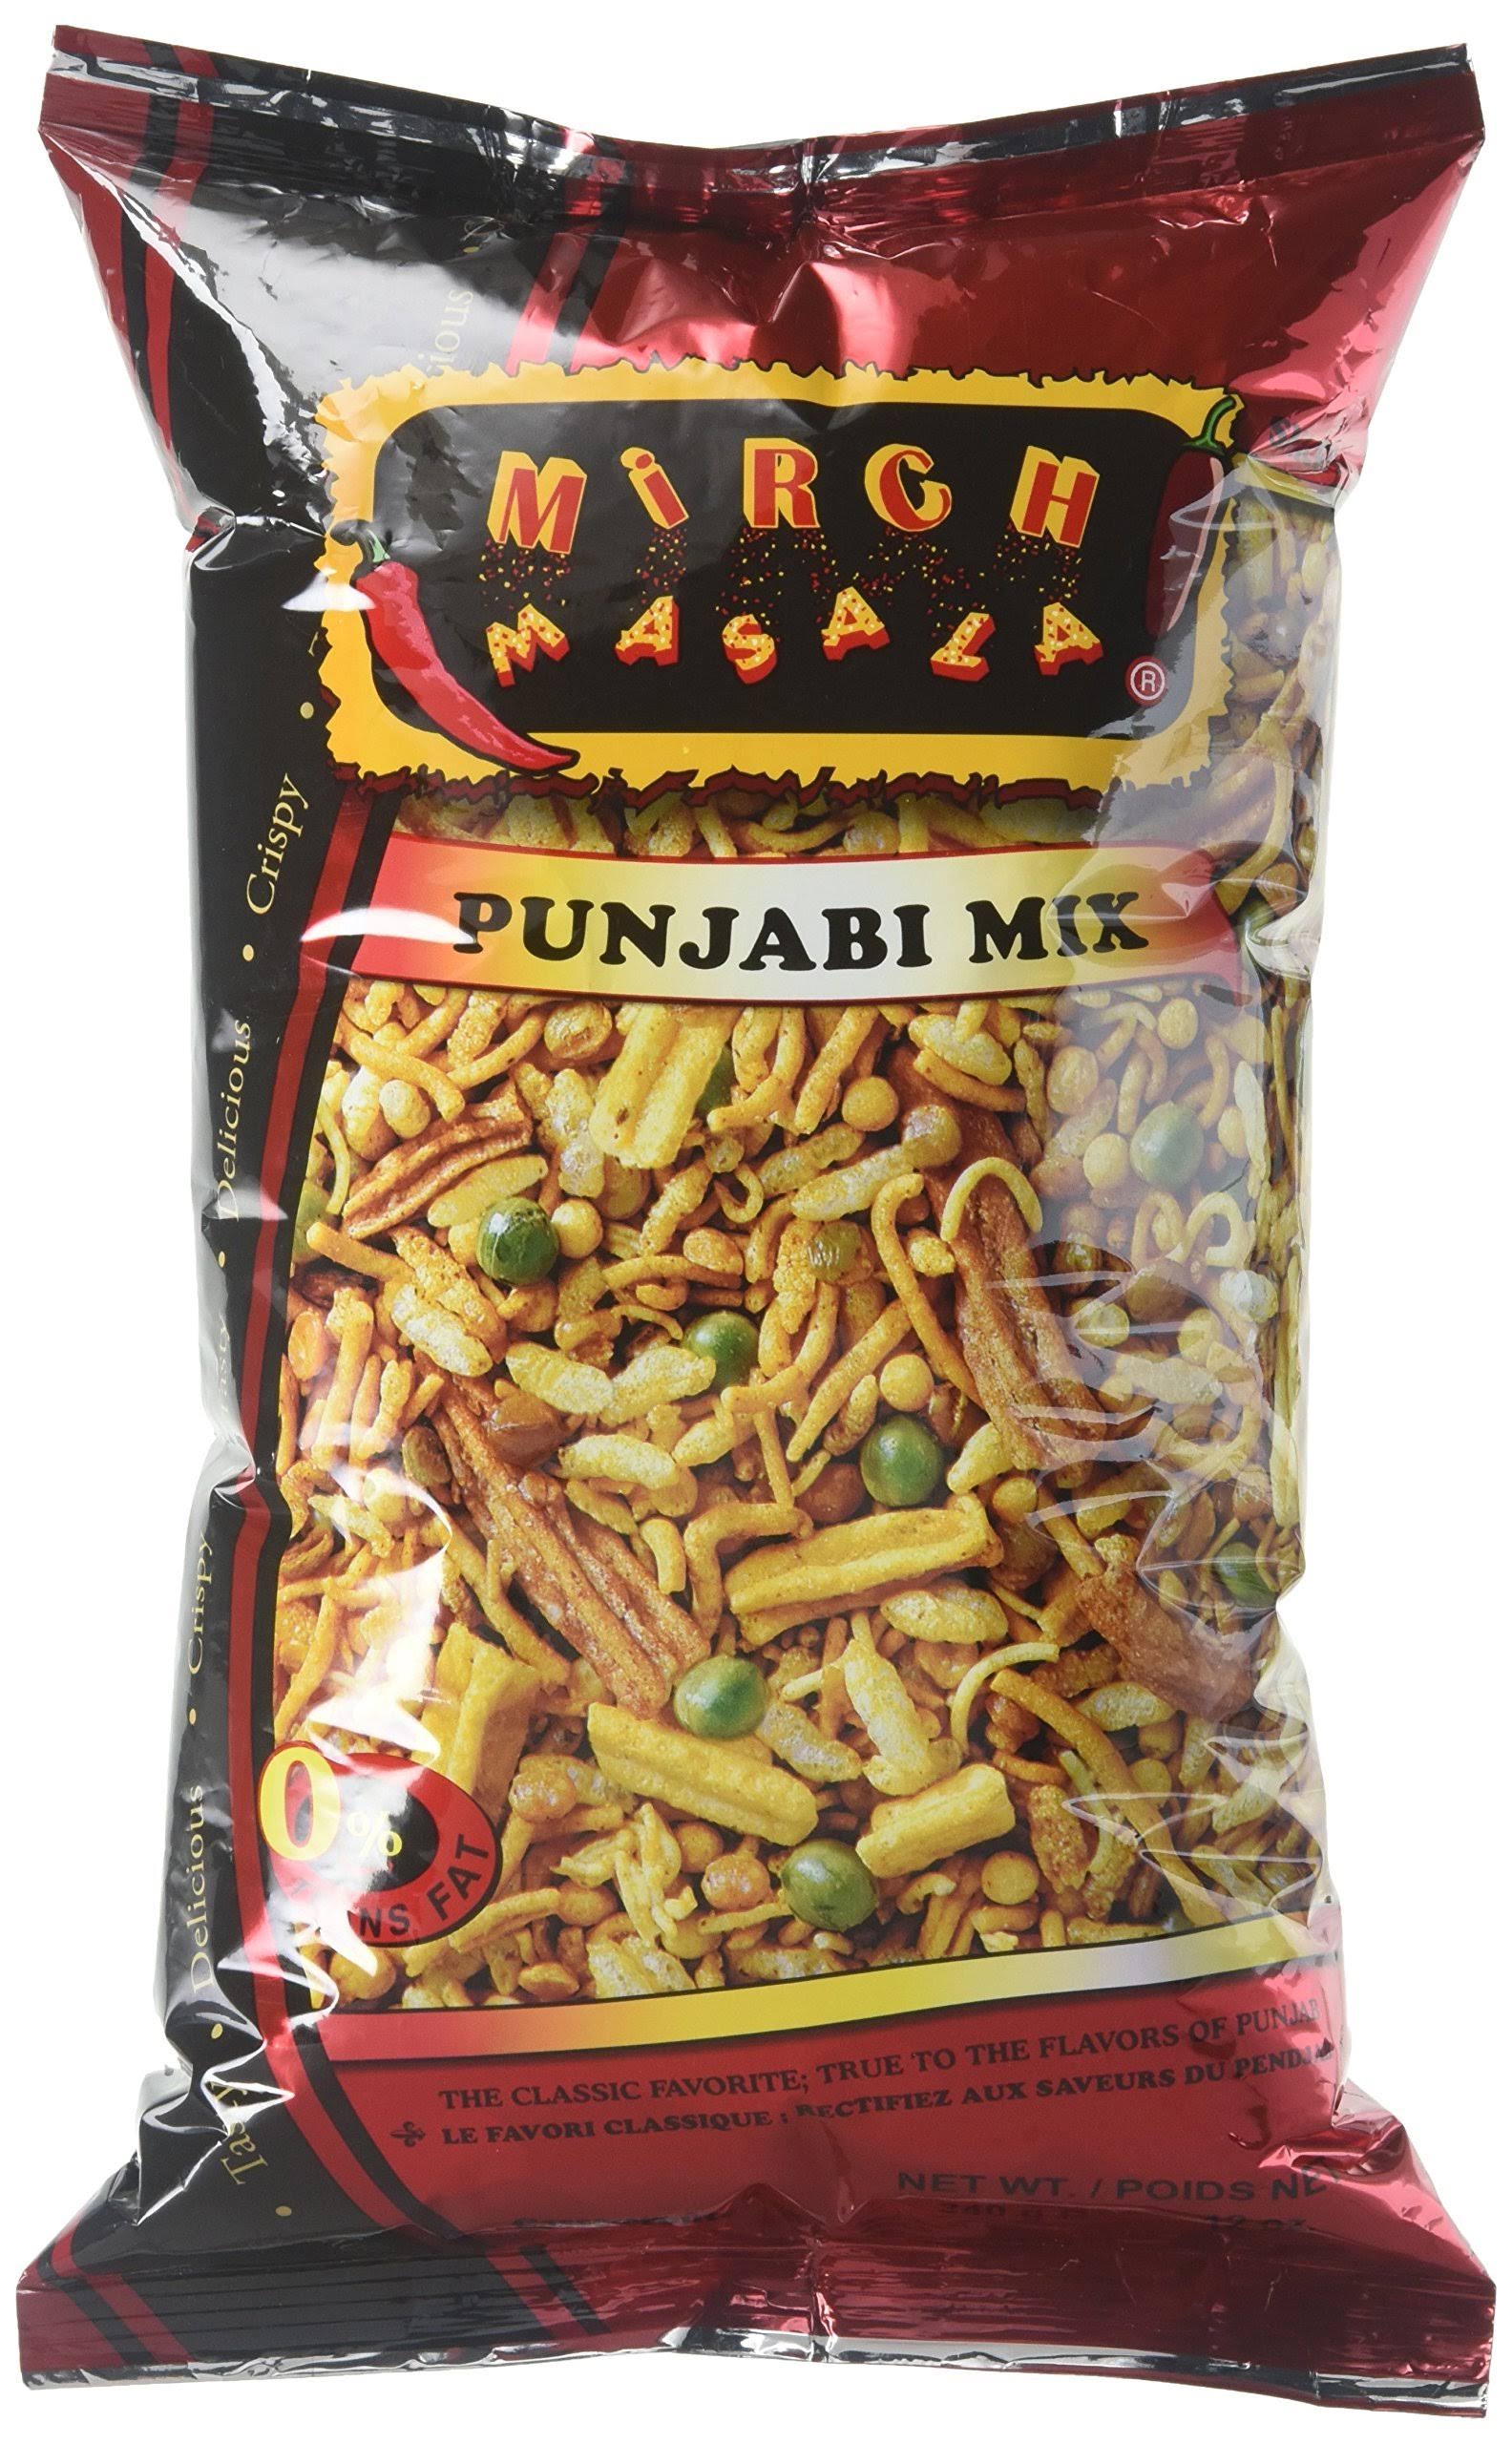 Mirch Masala Punjabi Mix - 12oz